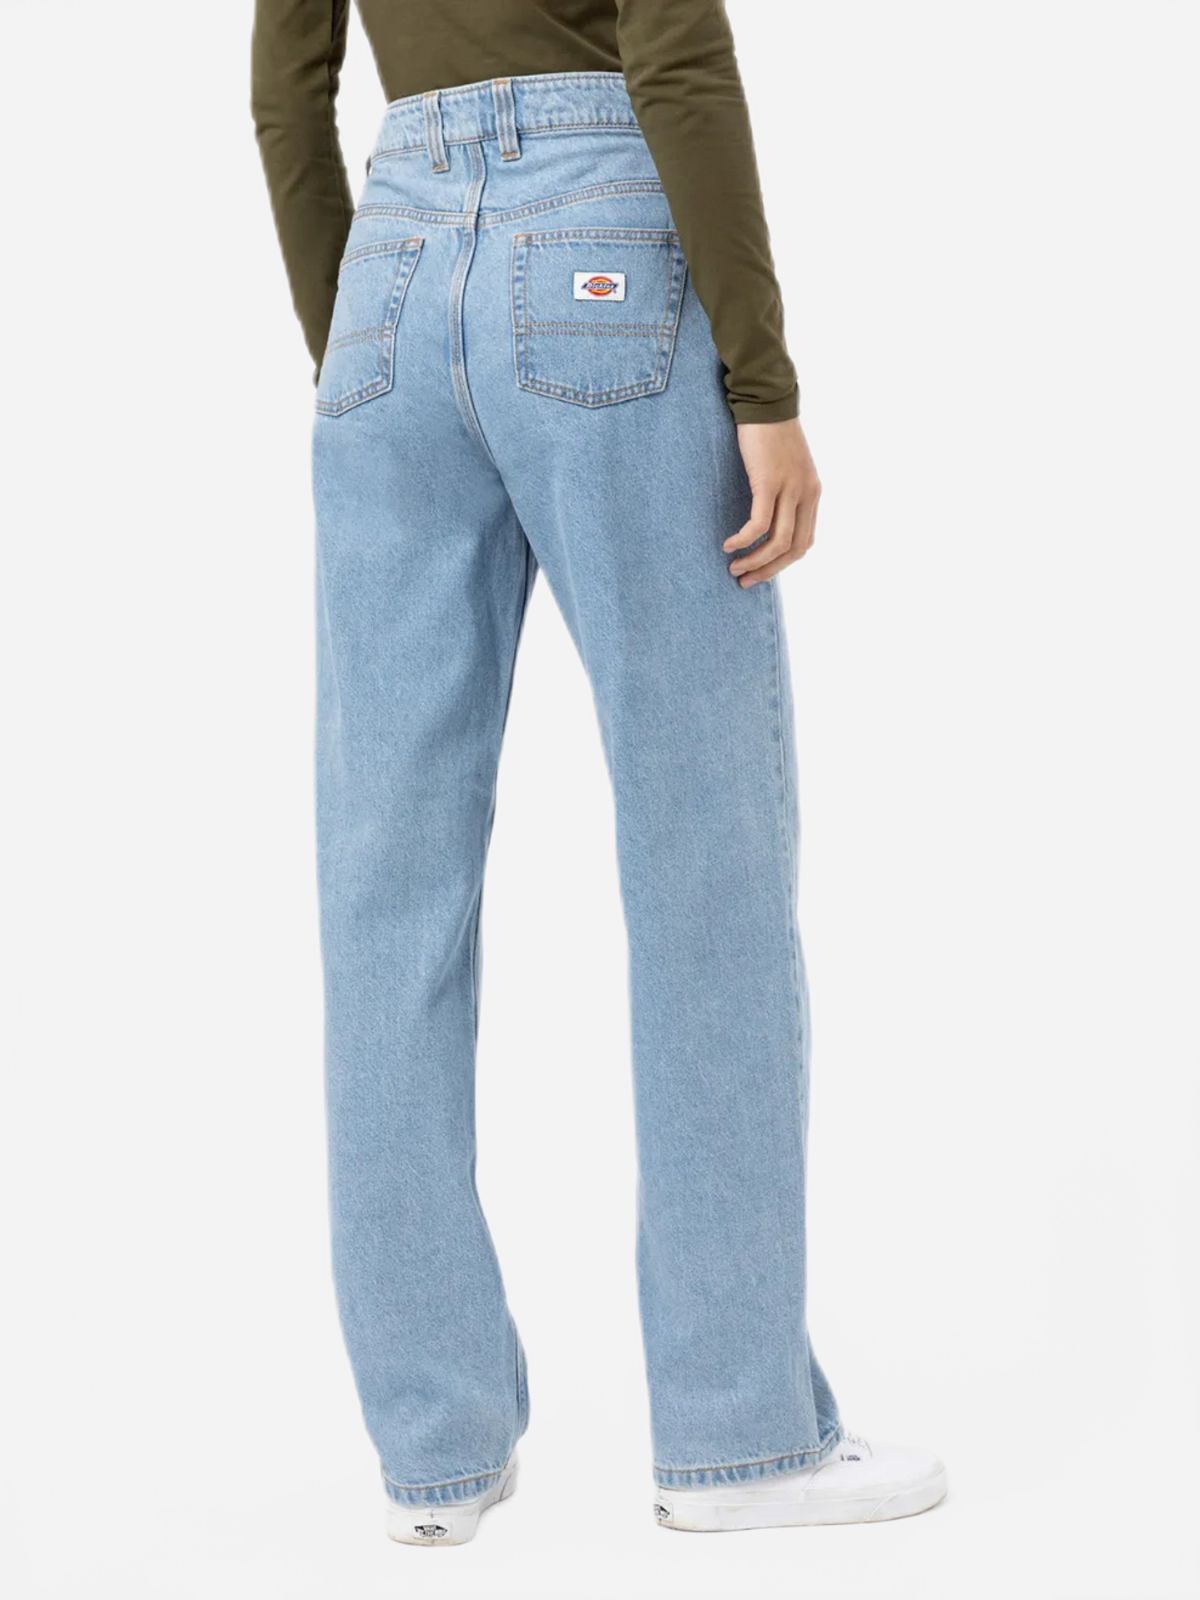  THOMASVILLE ג'ינס בגזרה רחבה של DICKIES